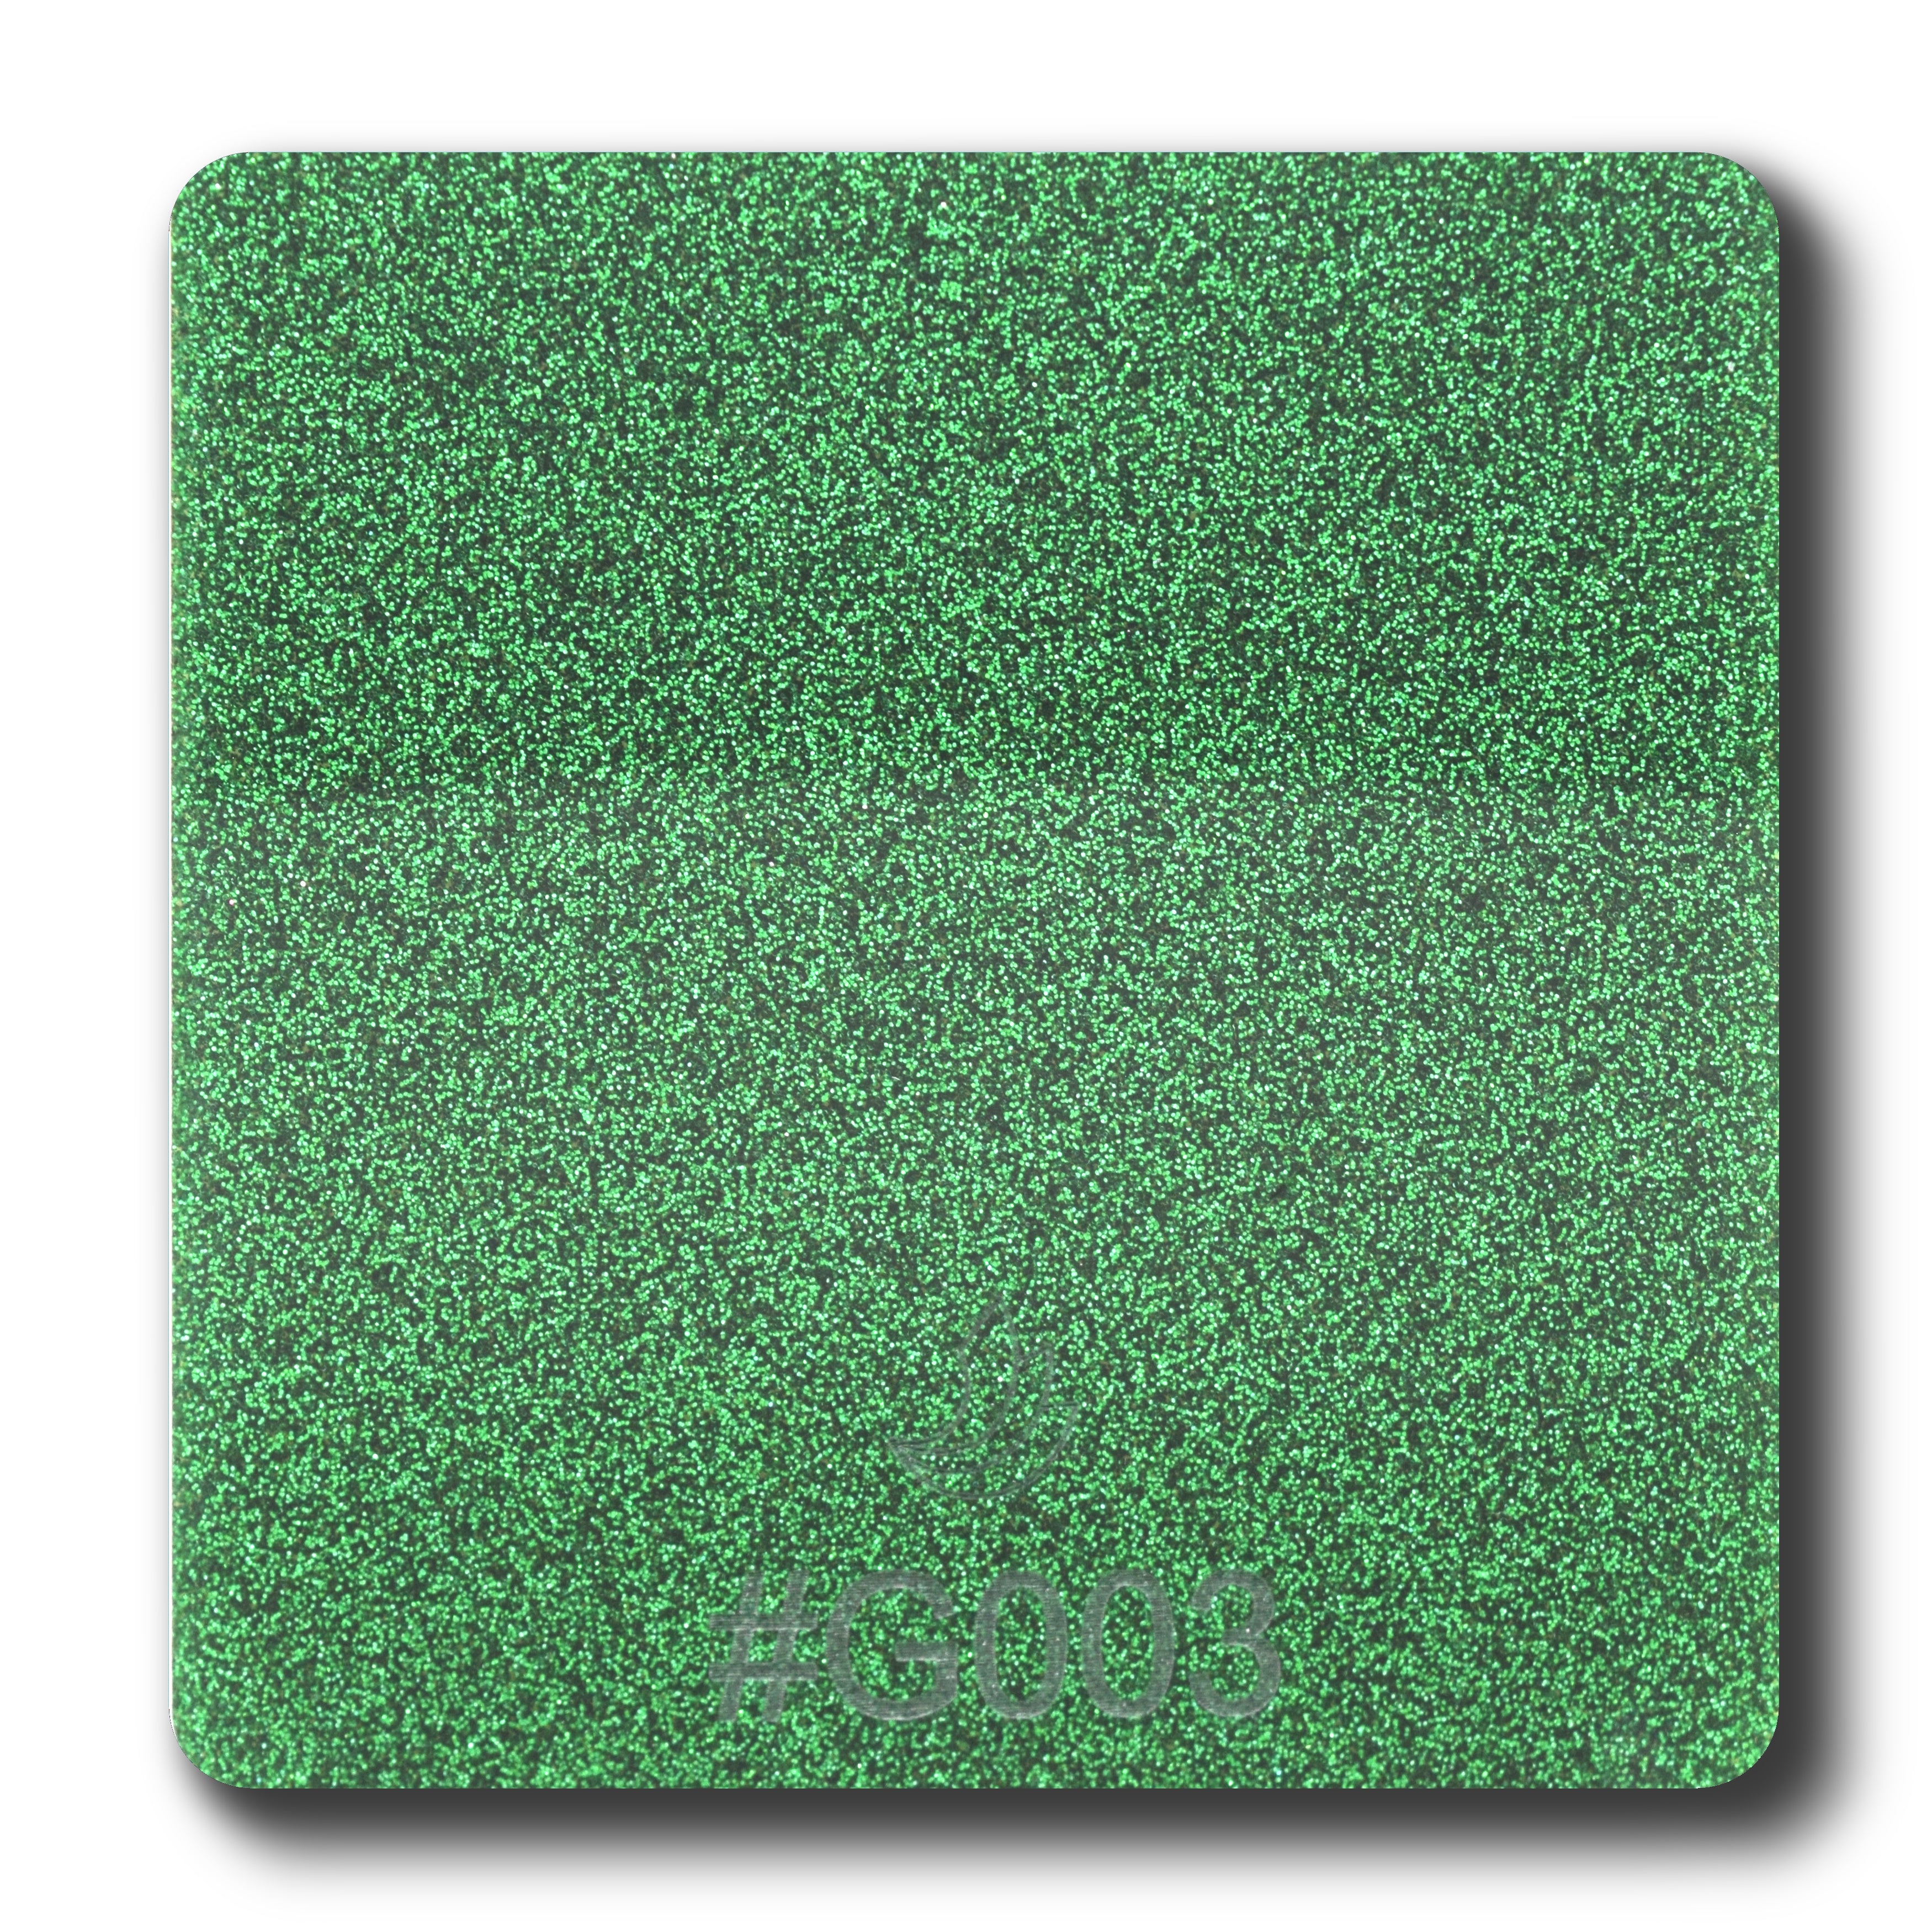 1/8" Green Glitter Two-Sided Acrylic Sheet